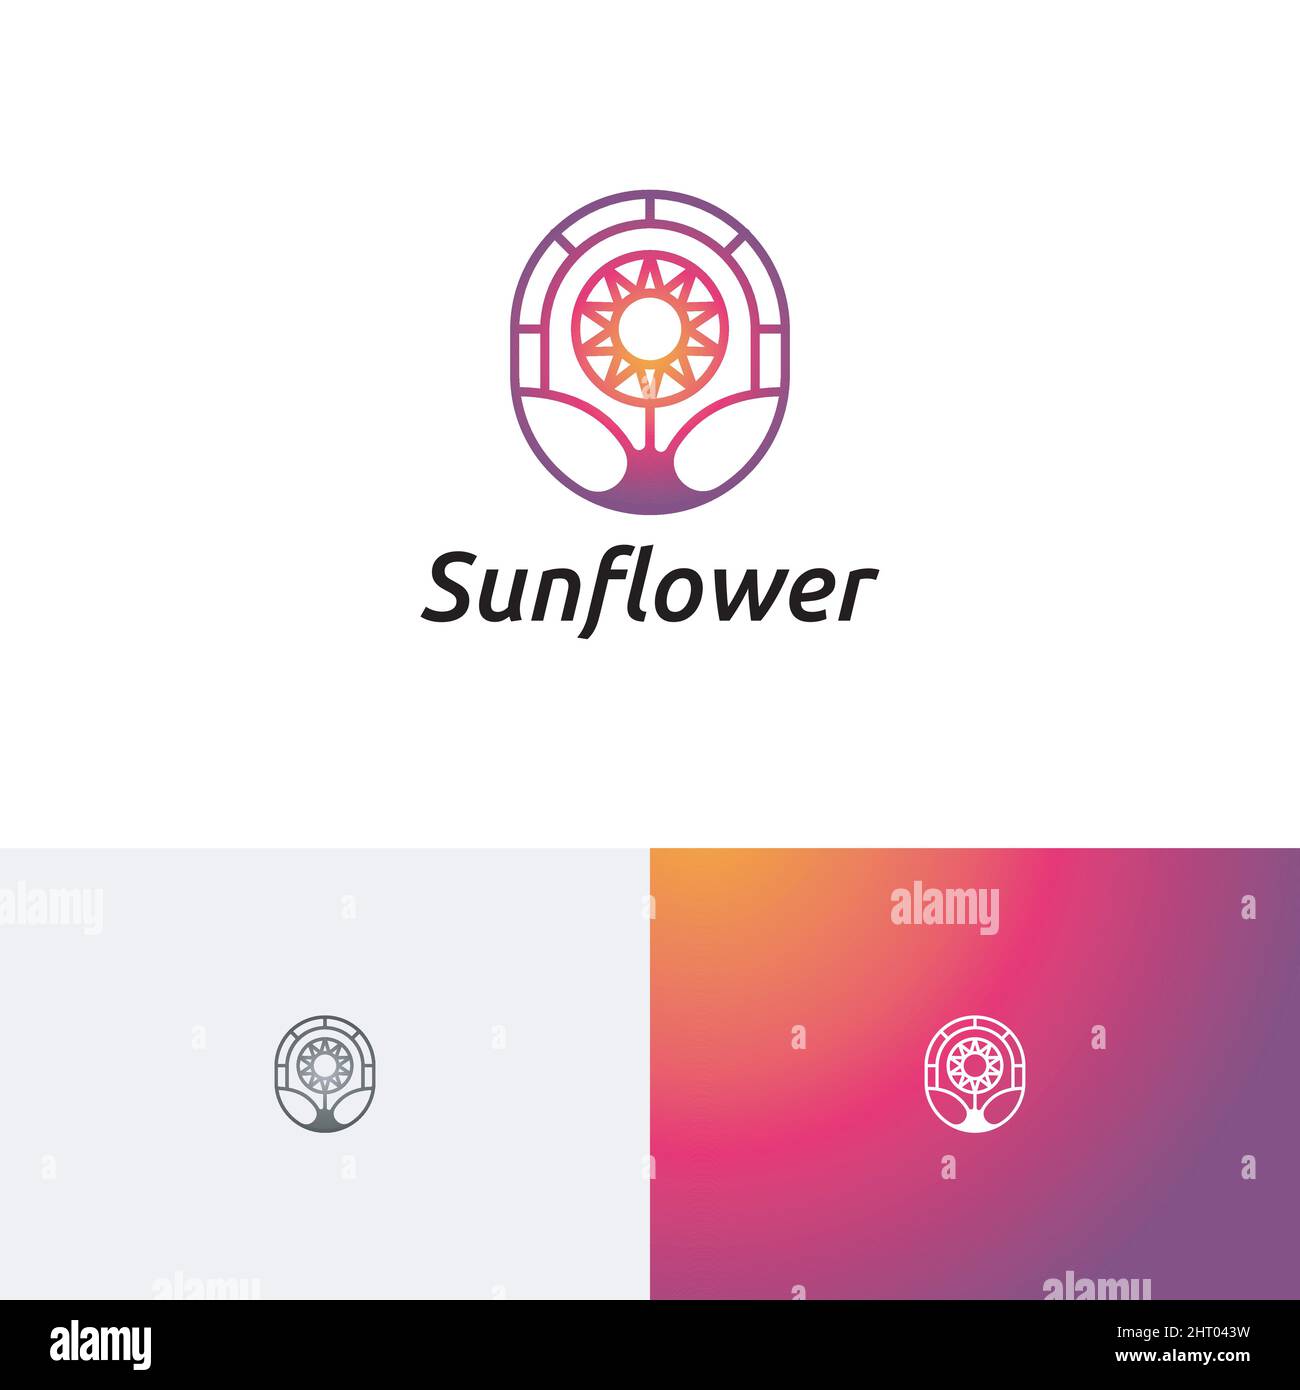 Windows Sunflower Sun Flower Floral Florist logo Template Illustration de Vecteur